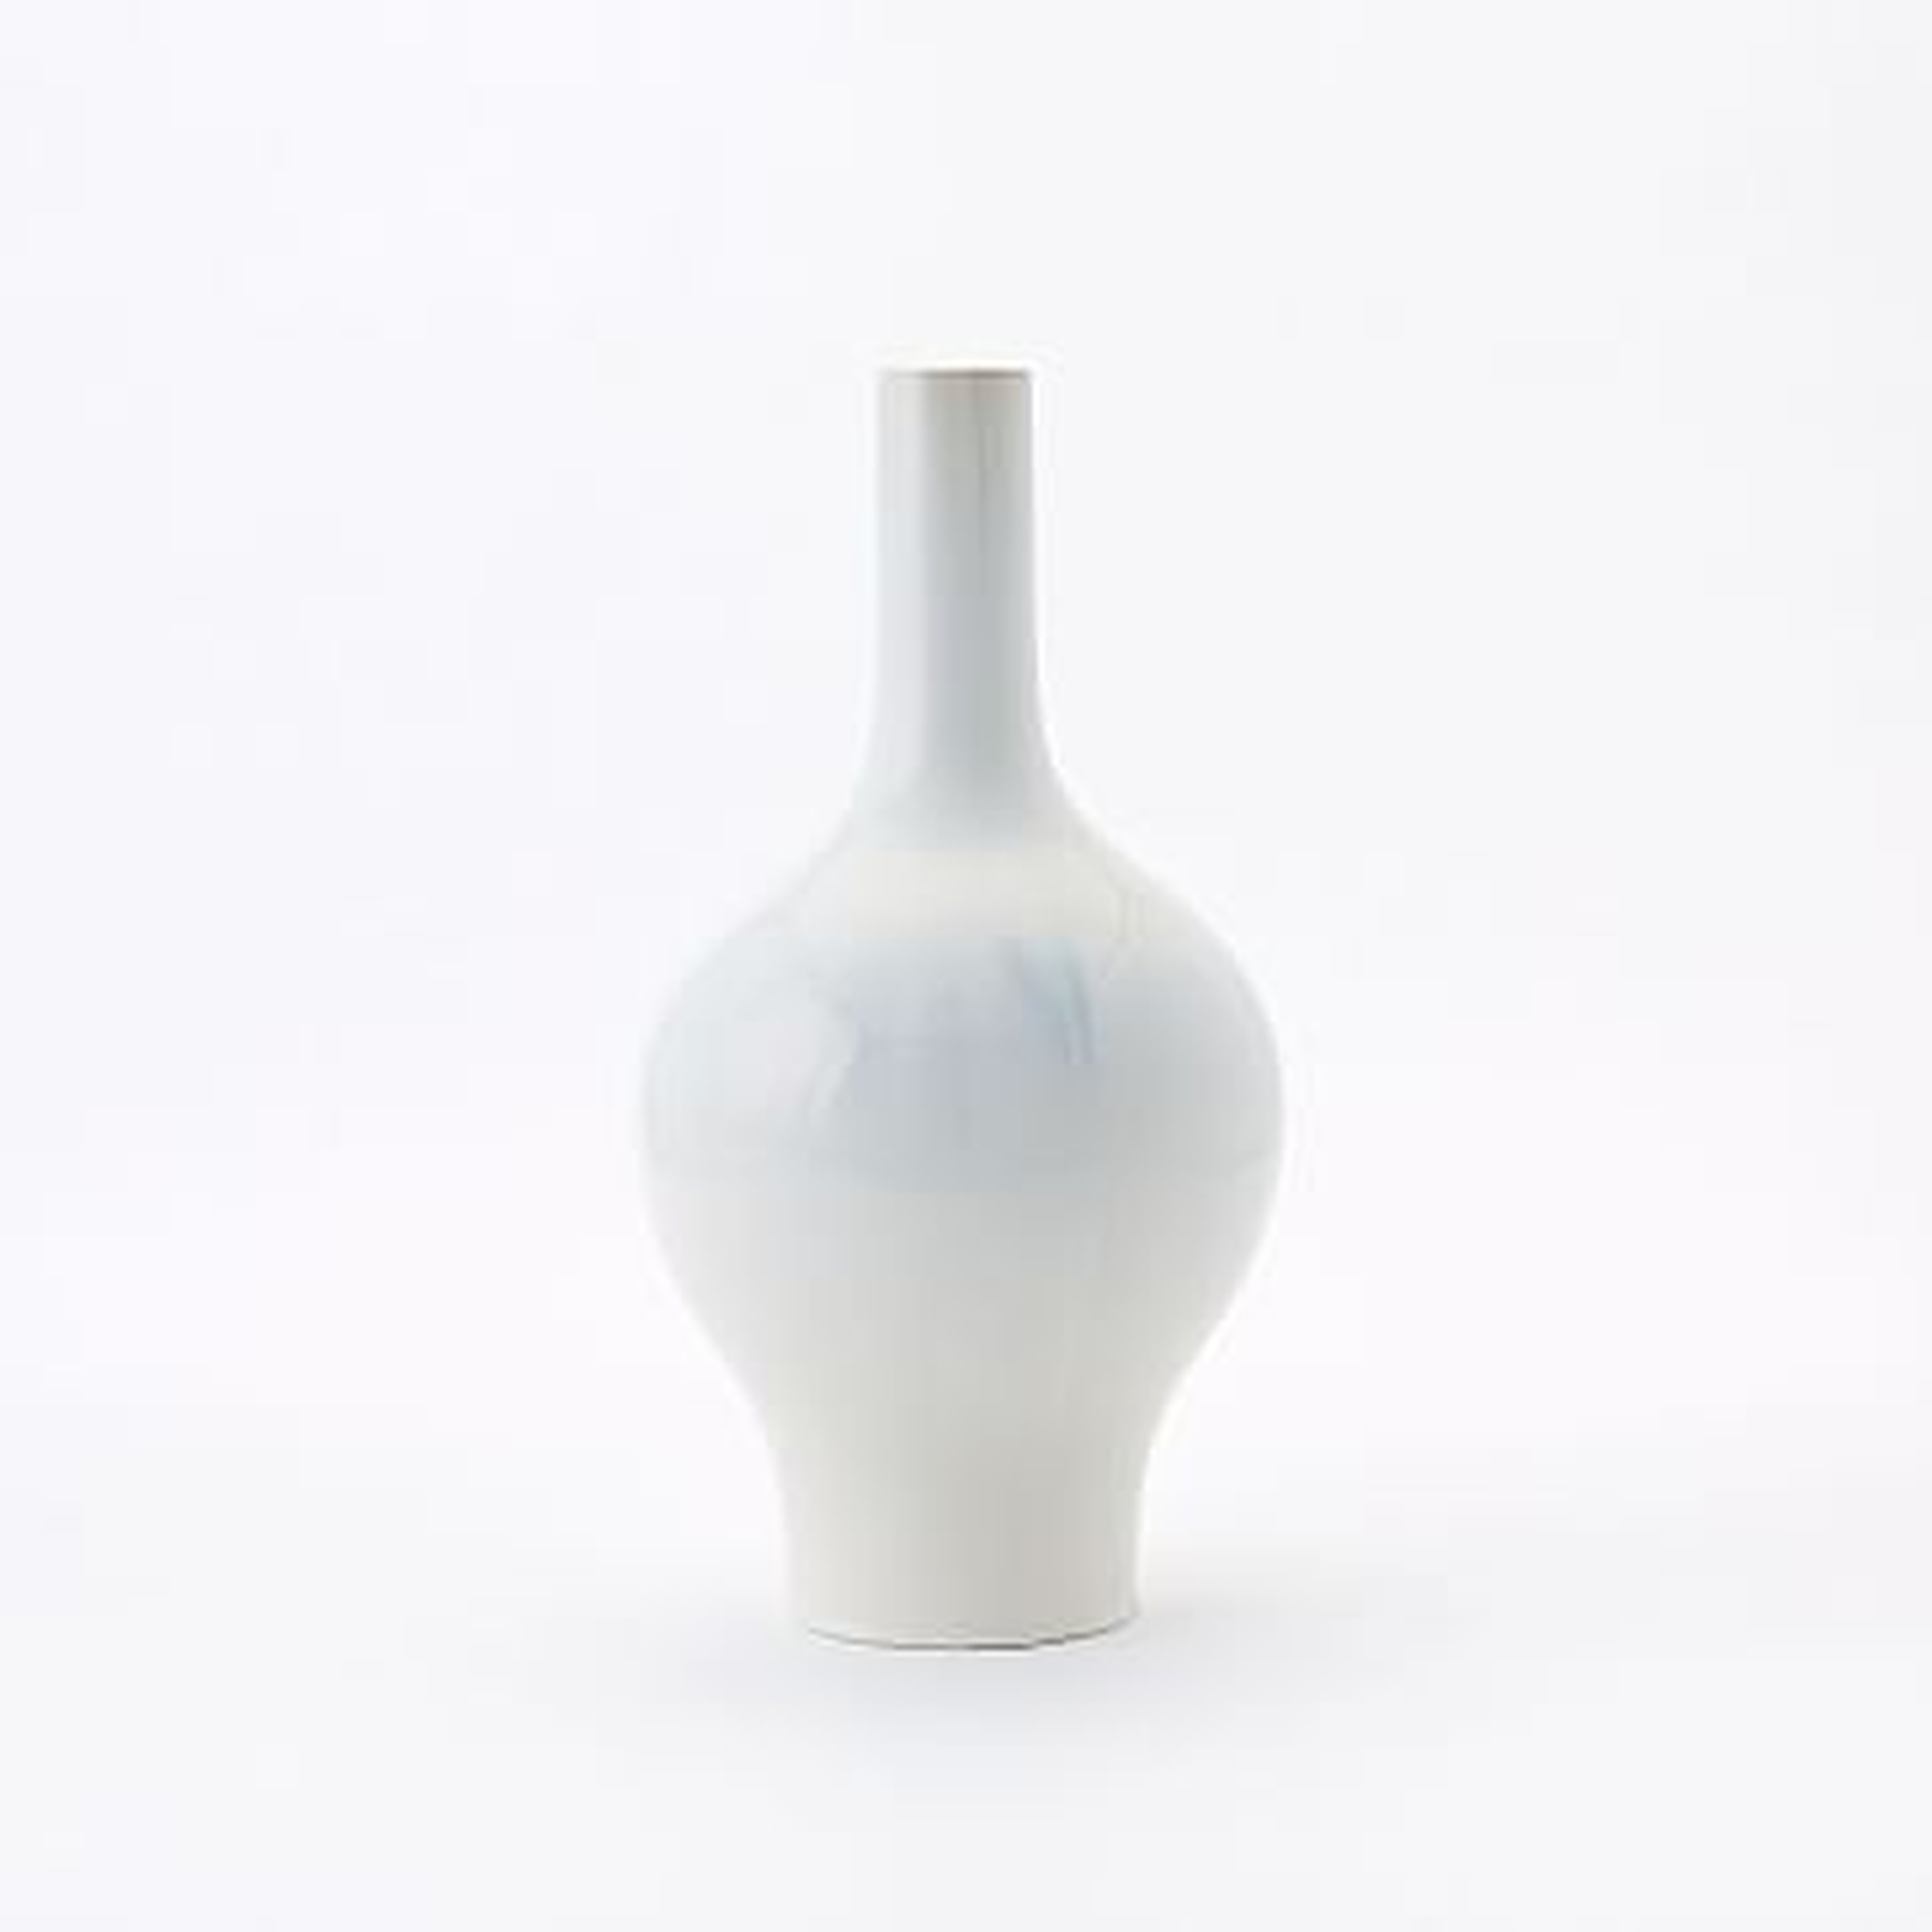 Reactive Glaze Ceramic Vases - White, Large - West Elm